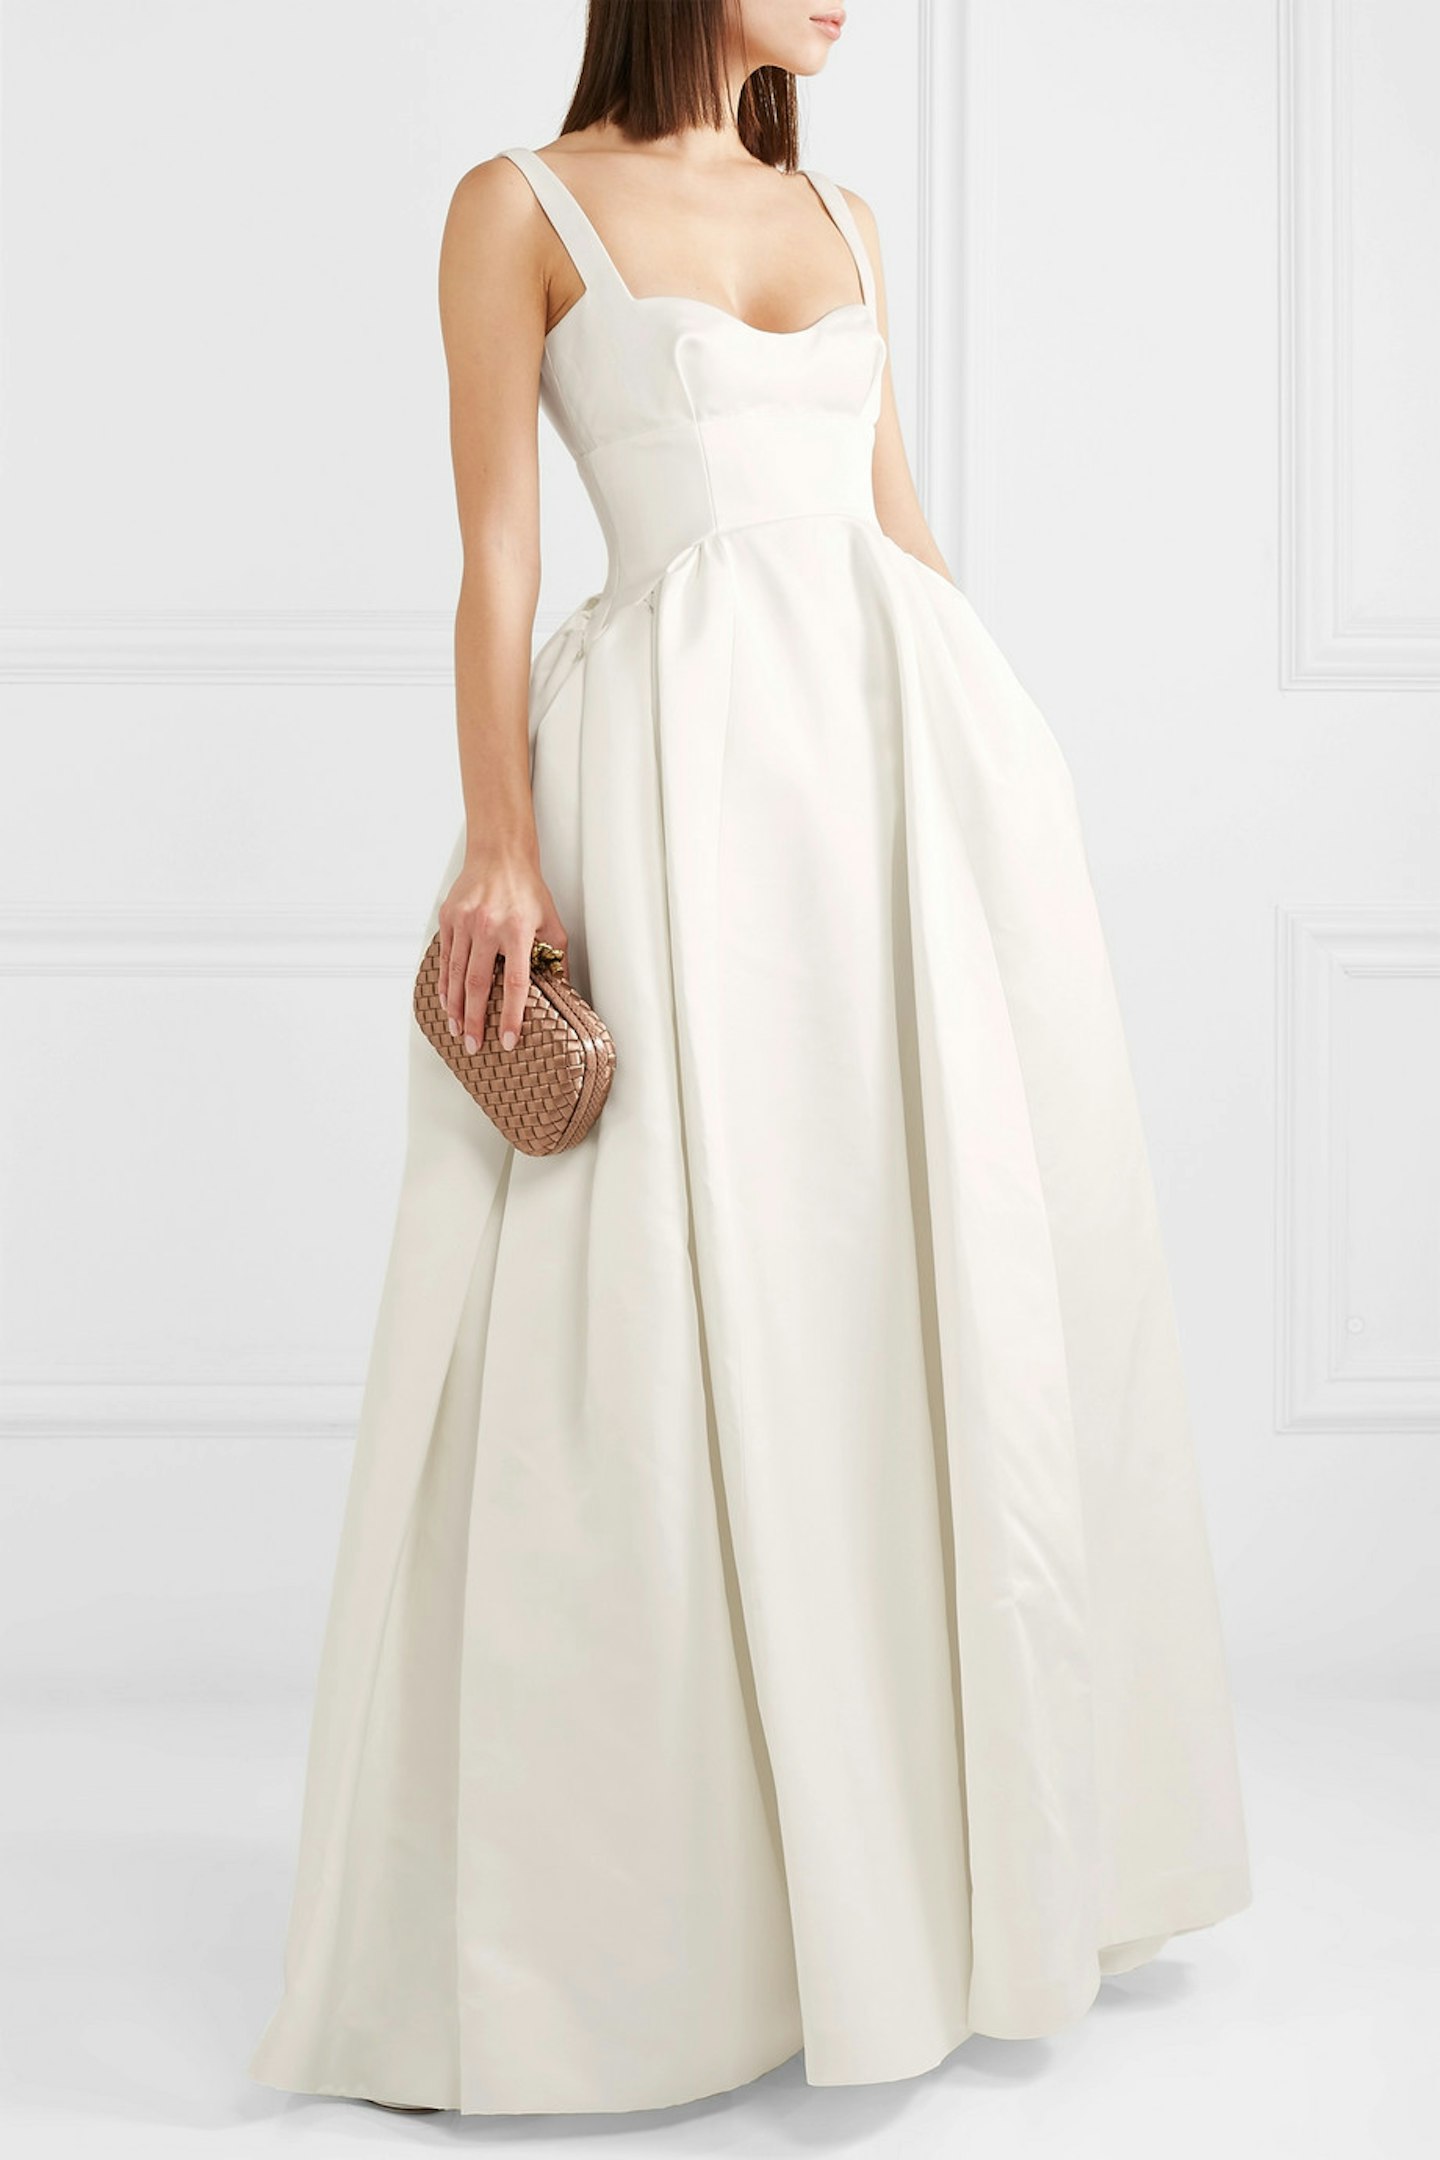 Emilia Wickstead, Diamond duchesse-satin gown, £4,270